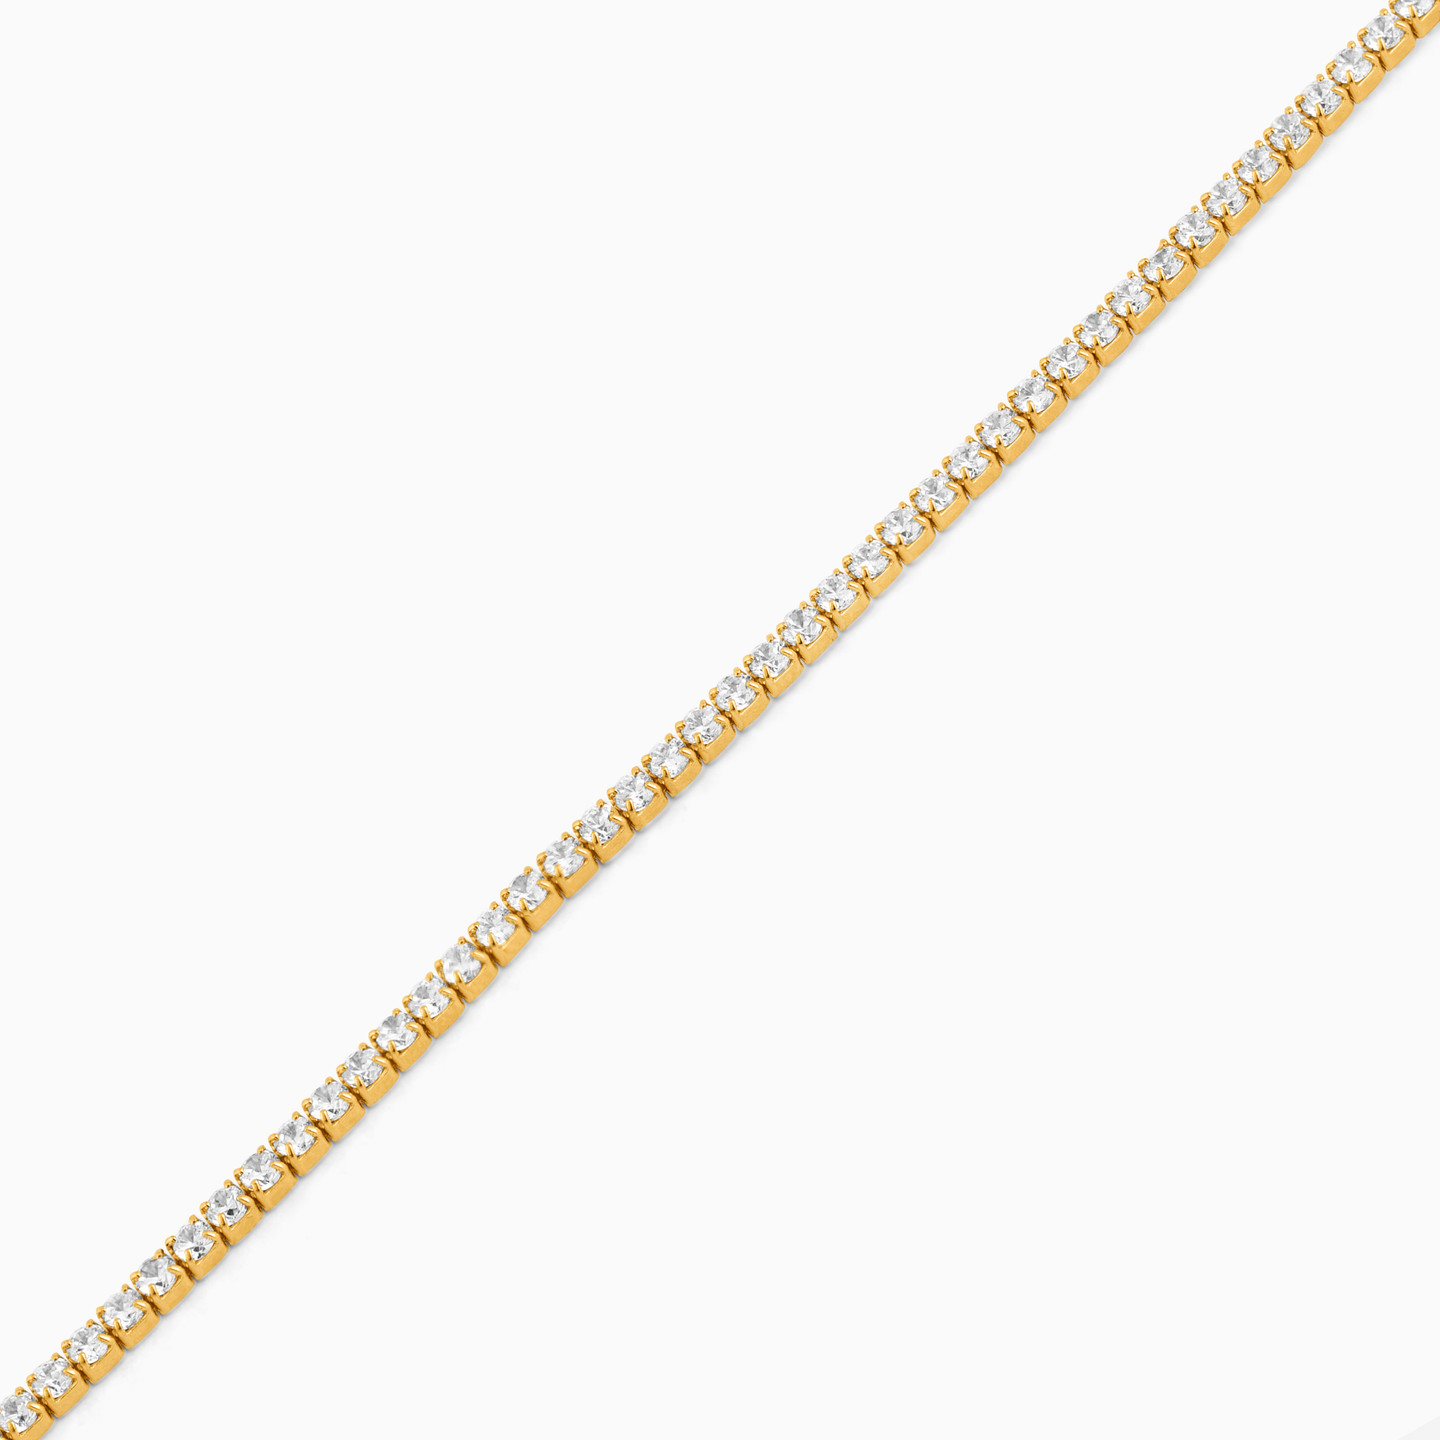 Gold Plated Cubic Zirconia Tennis Bracelet - 2